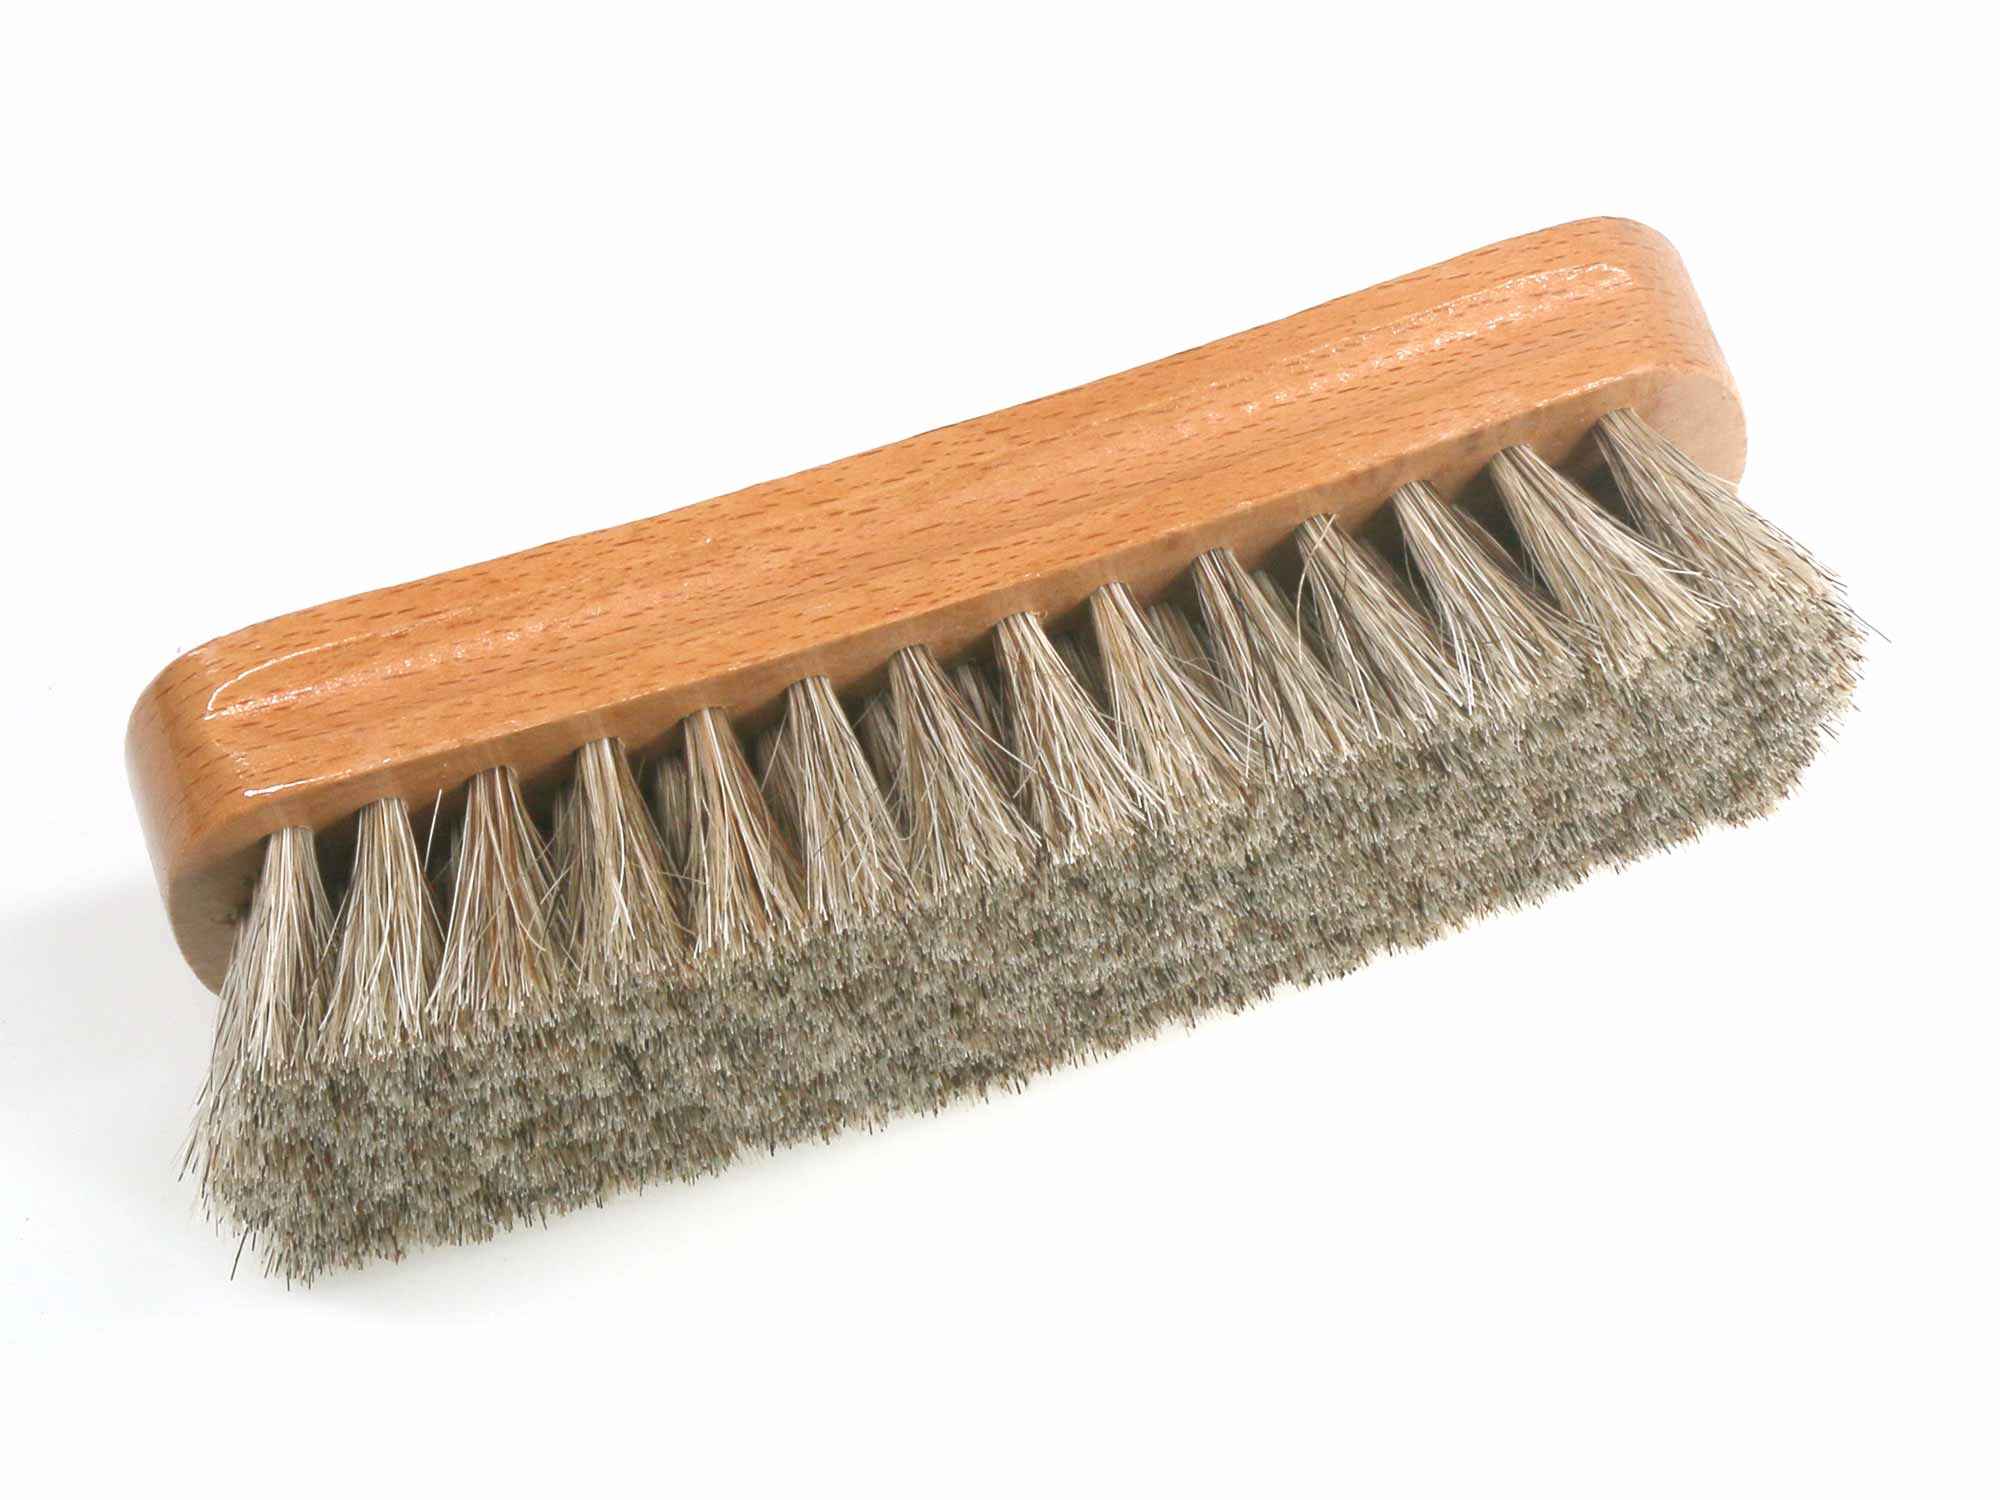 Selvyt Premium Horse Hair polishing Buffing Shoe Brush 